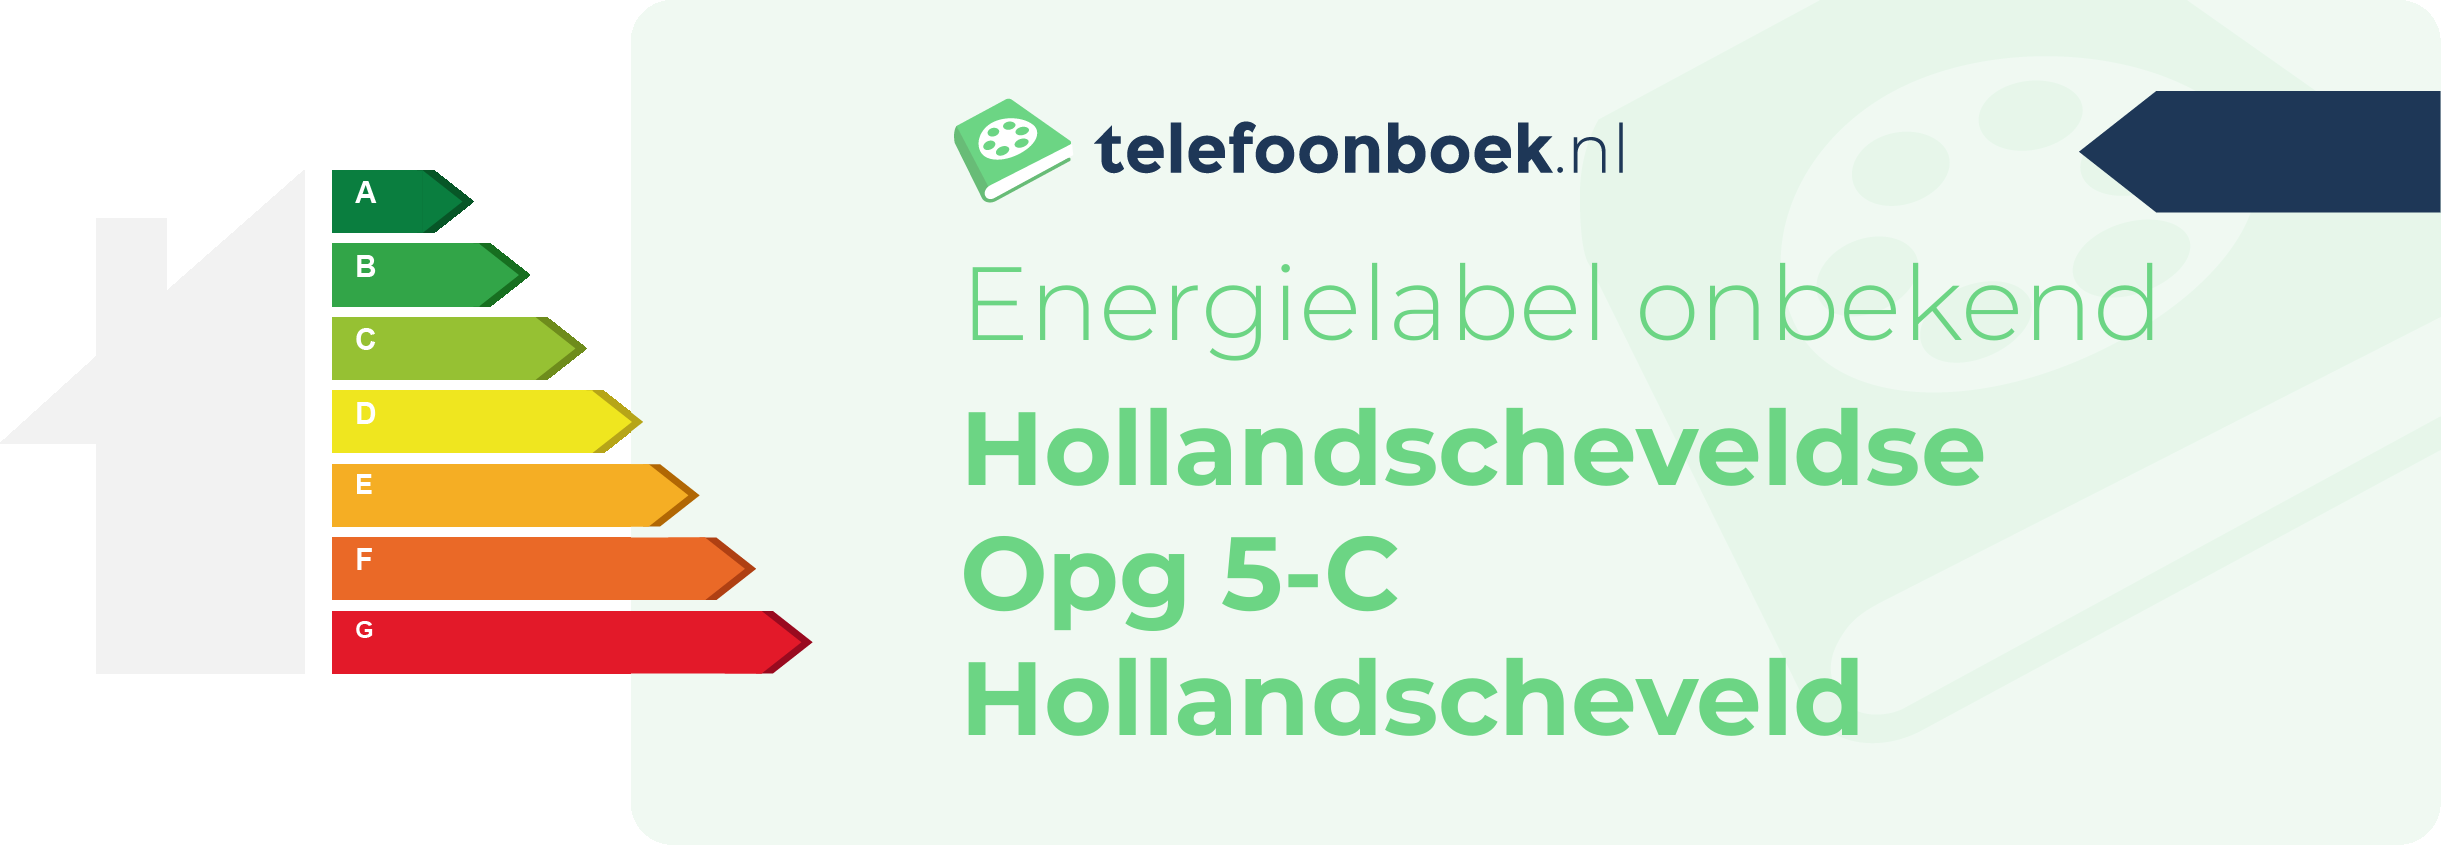 Energielabel Hollandscheveldse Opg 5-C Hollandscheveld